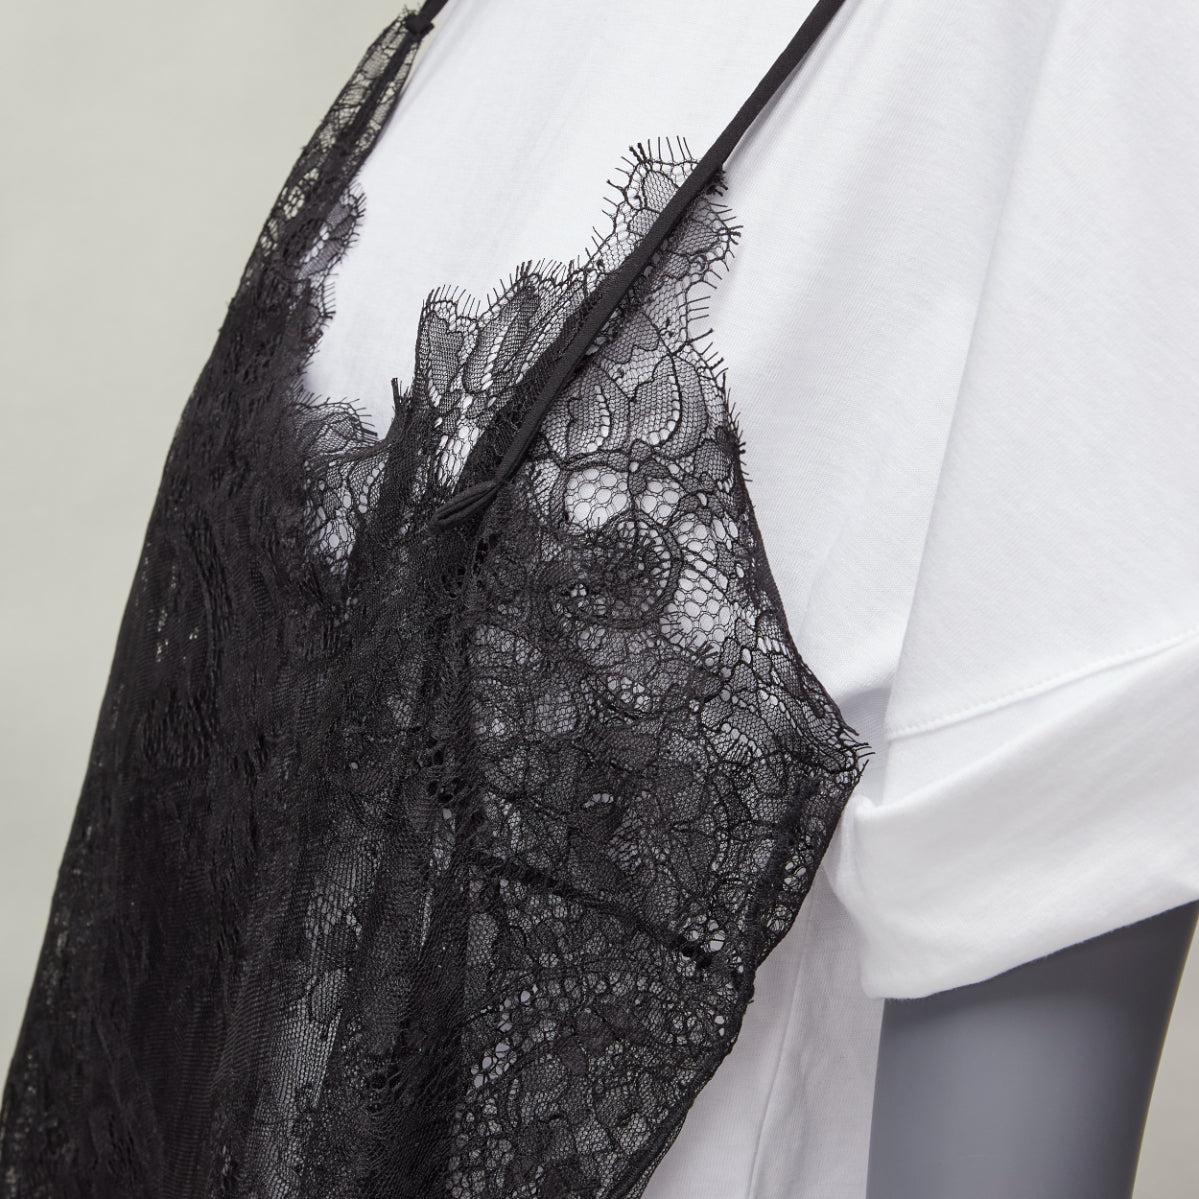 PHILOSOPHY Lorenzo Serafini tromp loiel draped silk camisole white tshirt XS For Sale 3